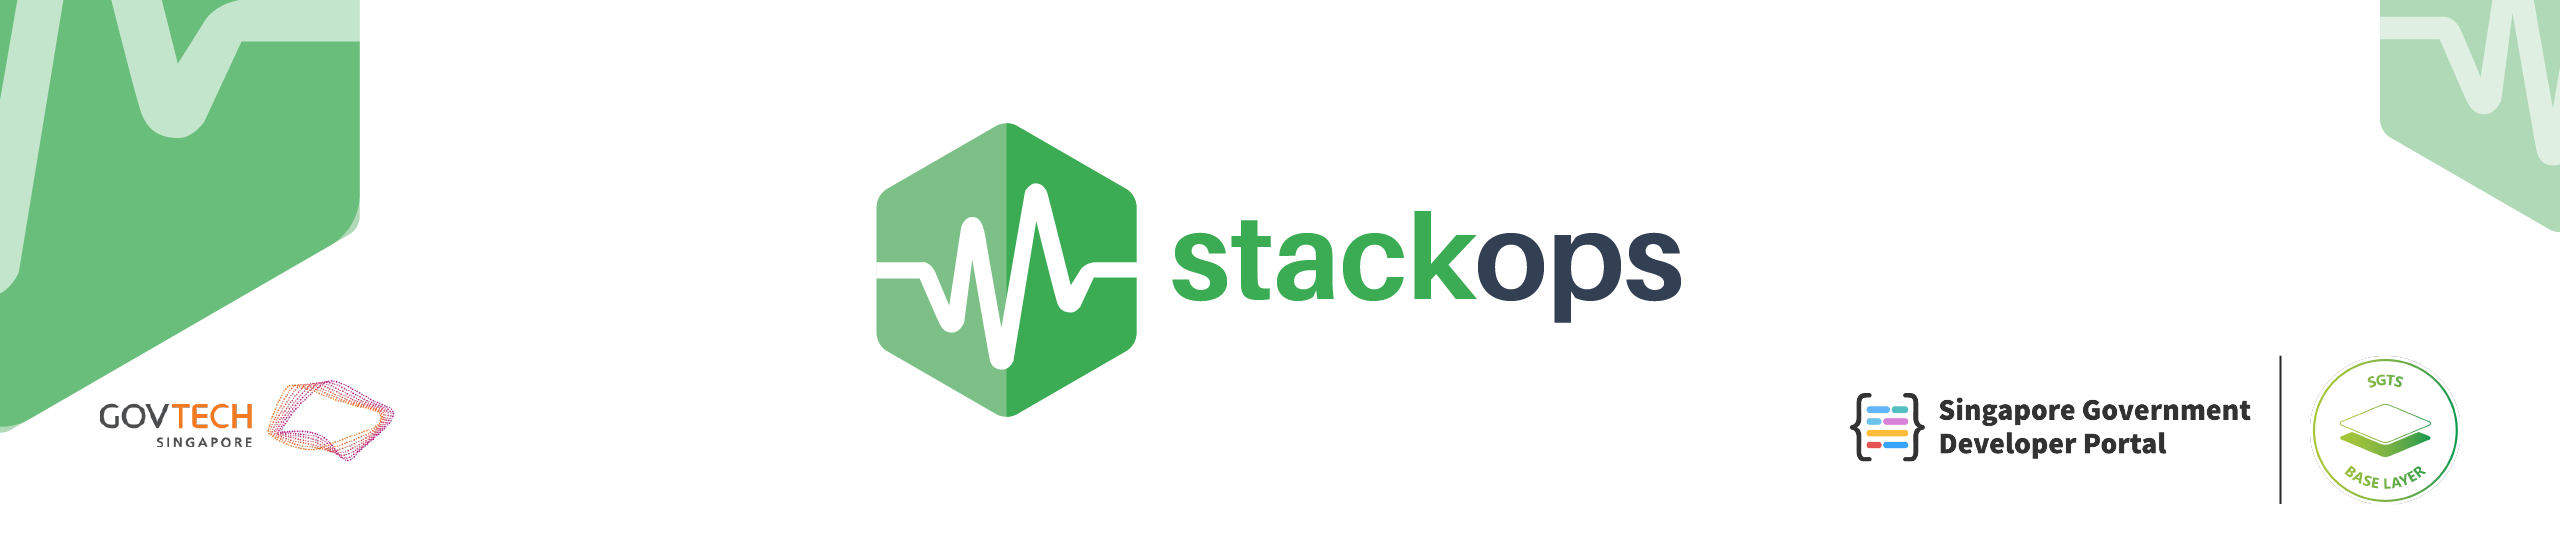 StackOps  header banner